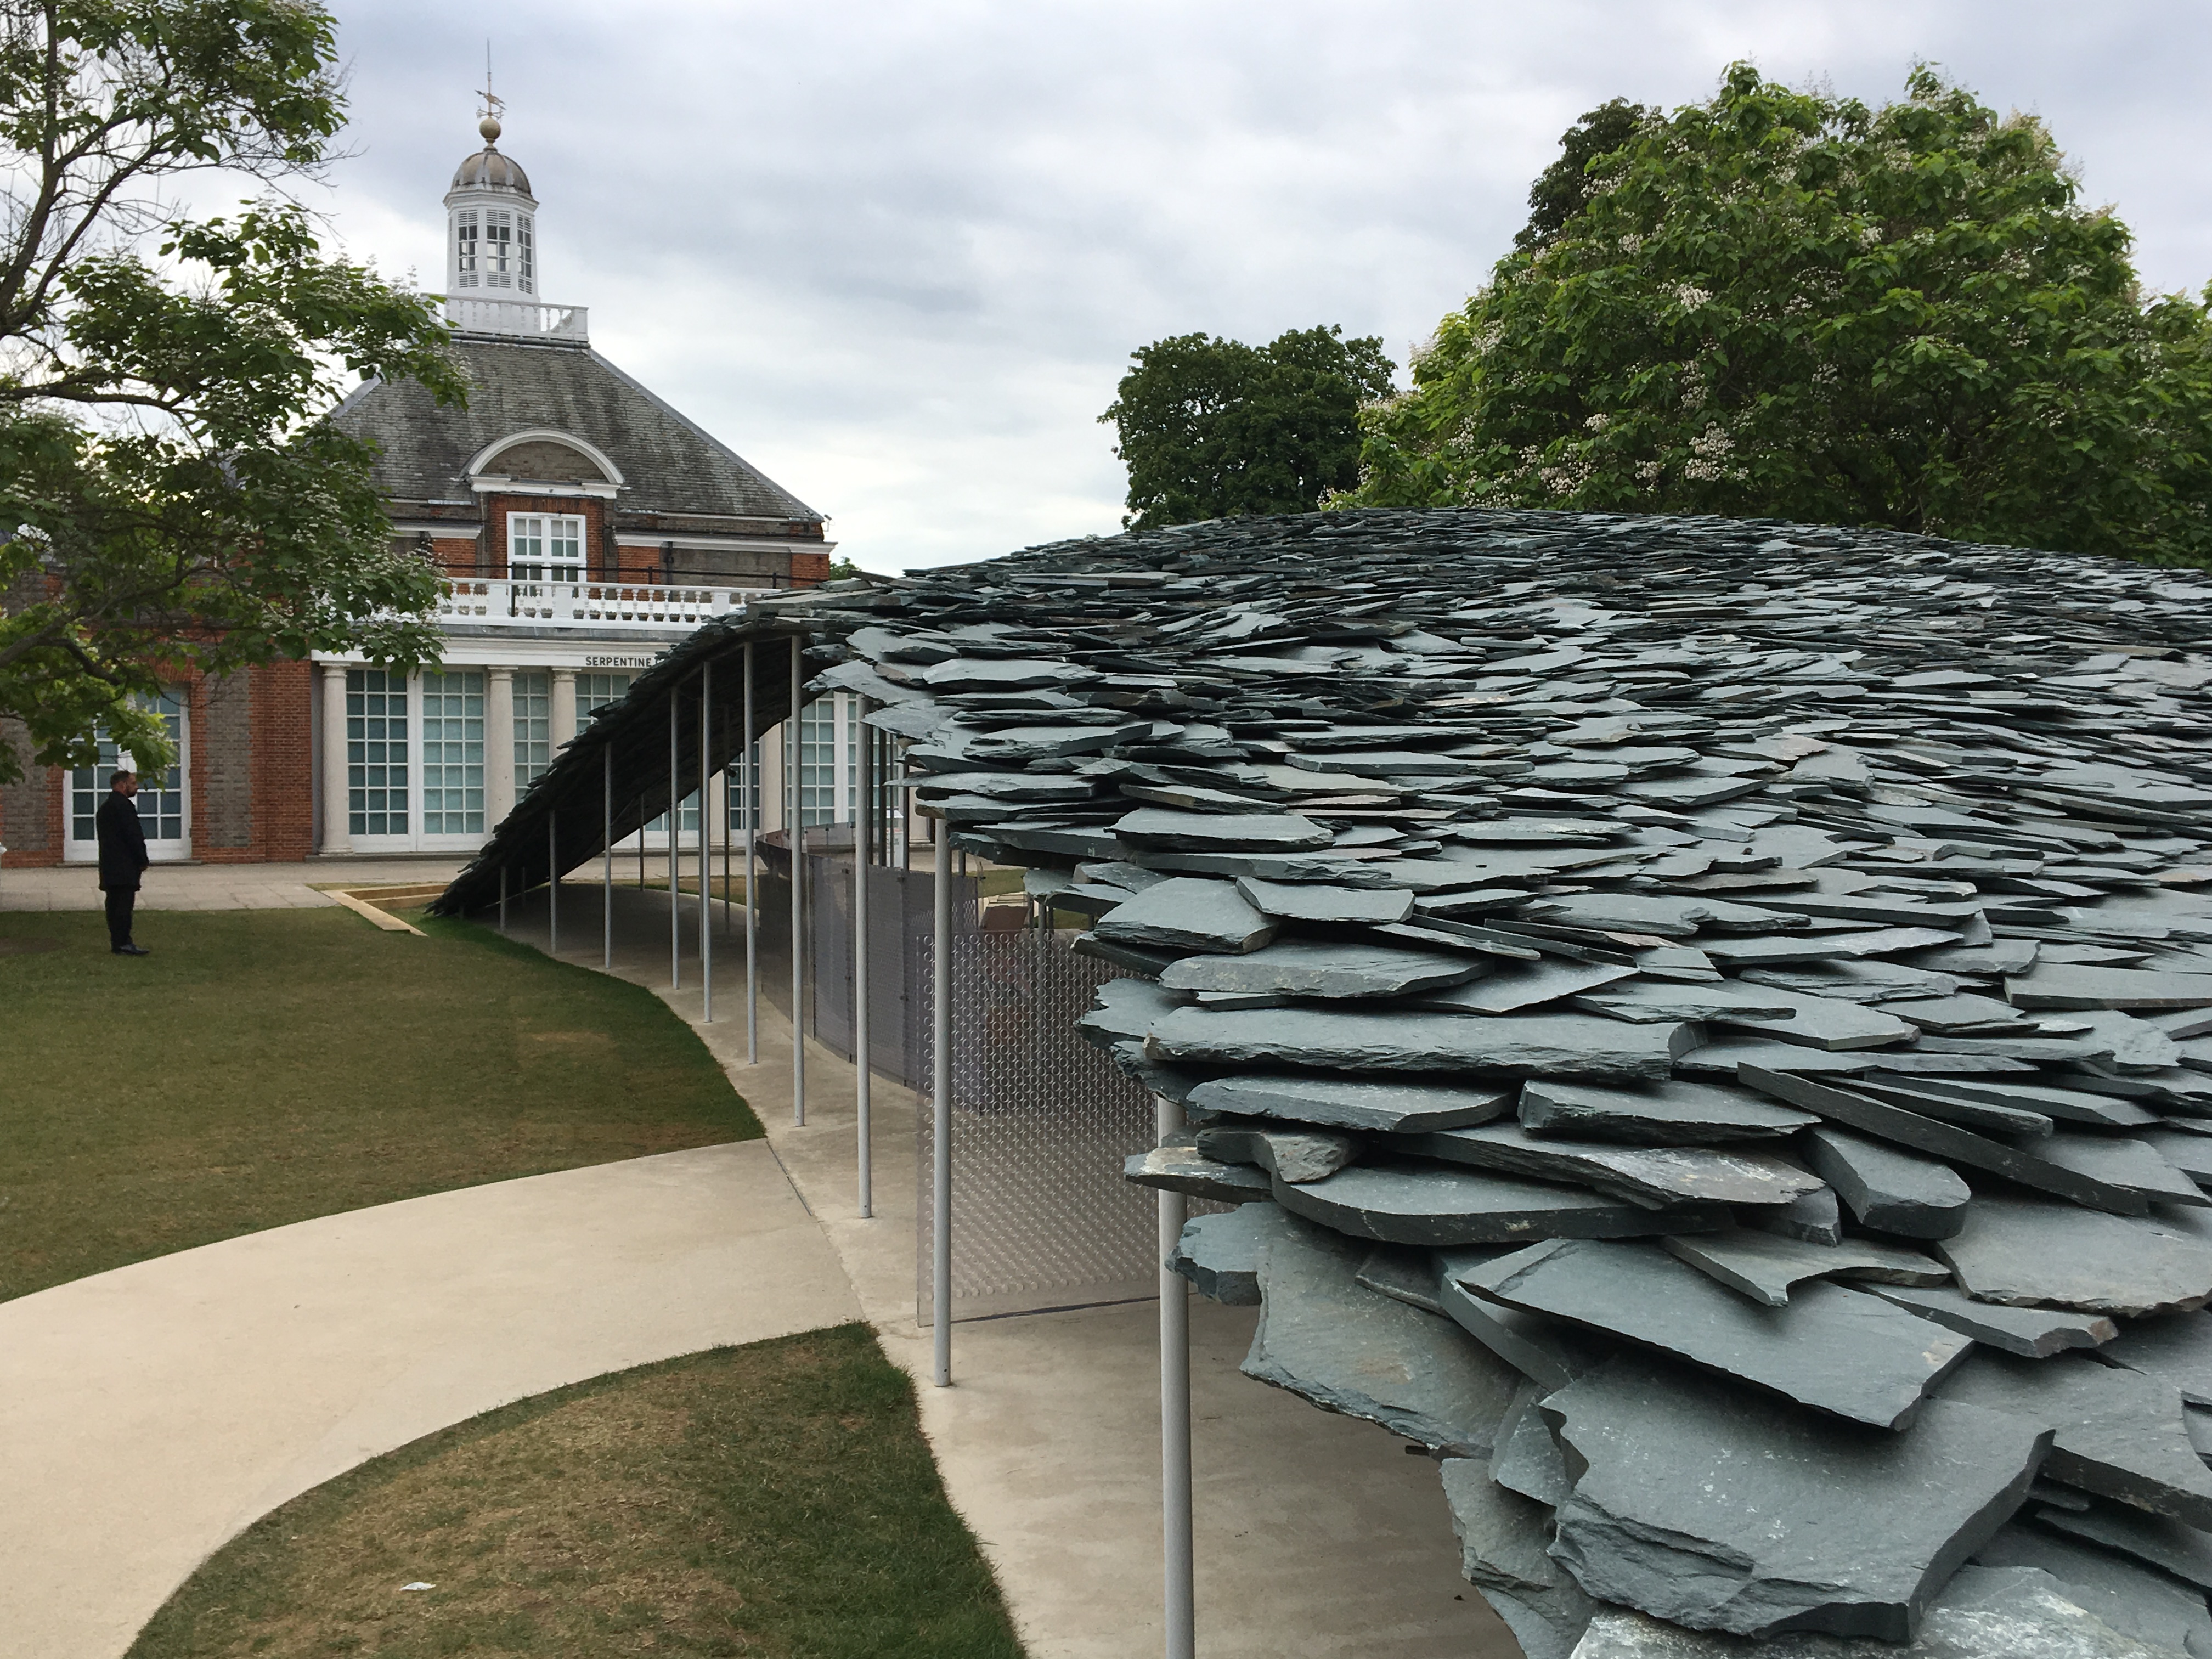 Junya Ishigami's Serpentine Pavilion architecture